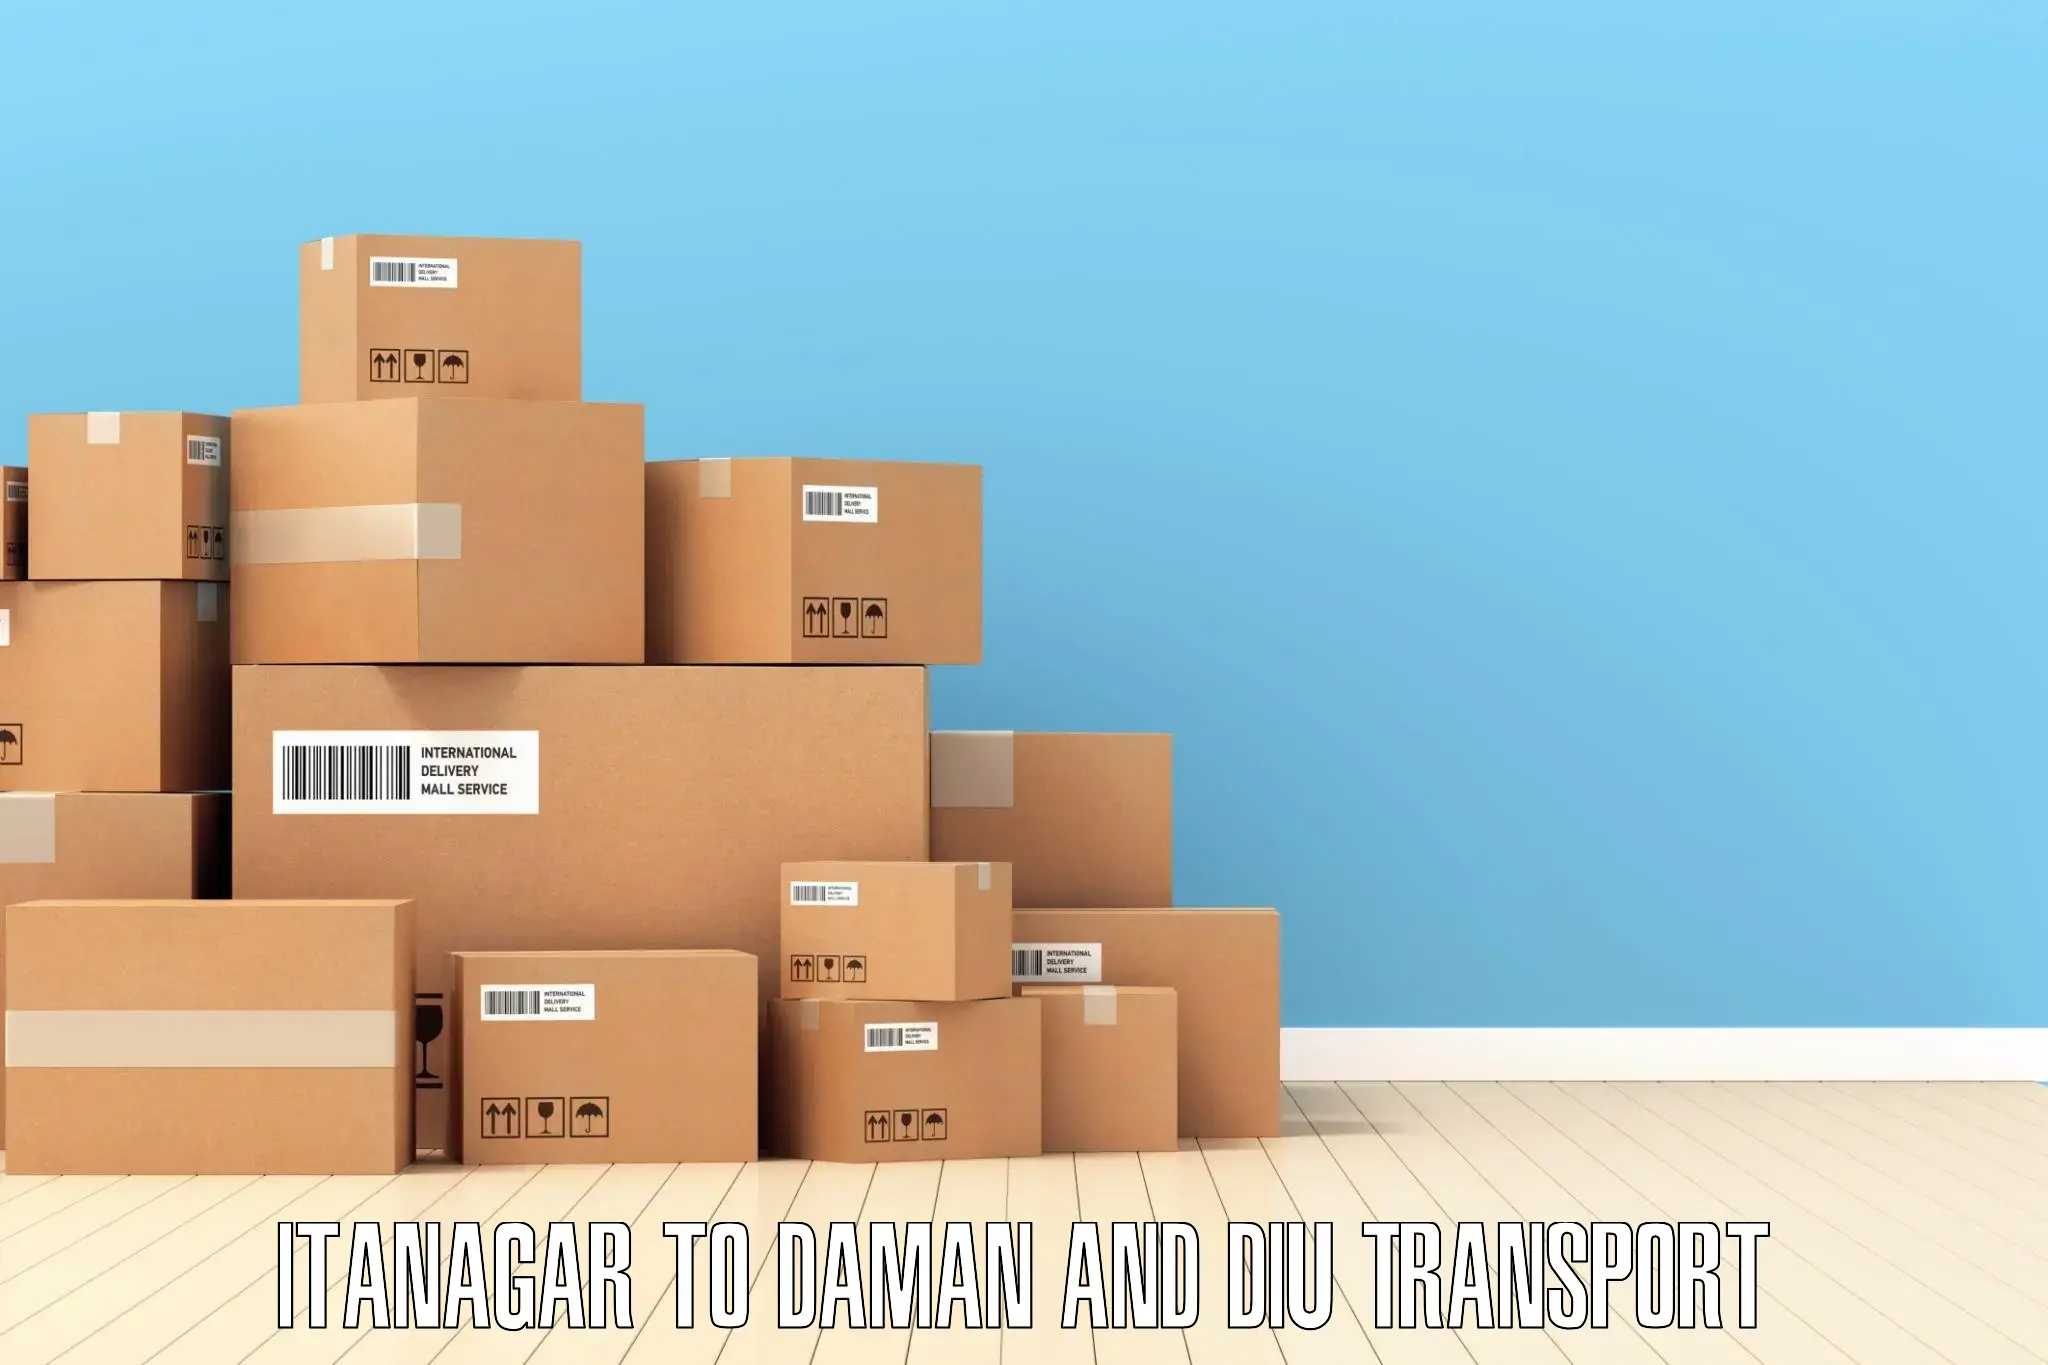 Transport in sharing Itanagar to Daman and Diu